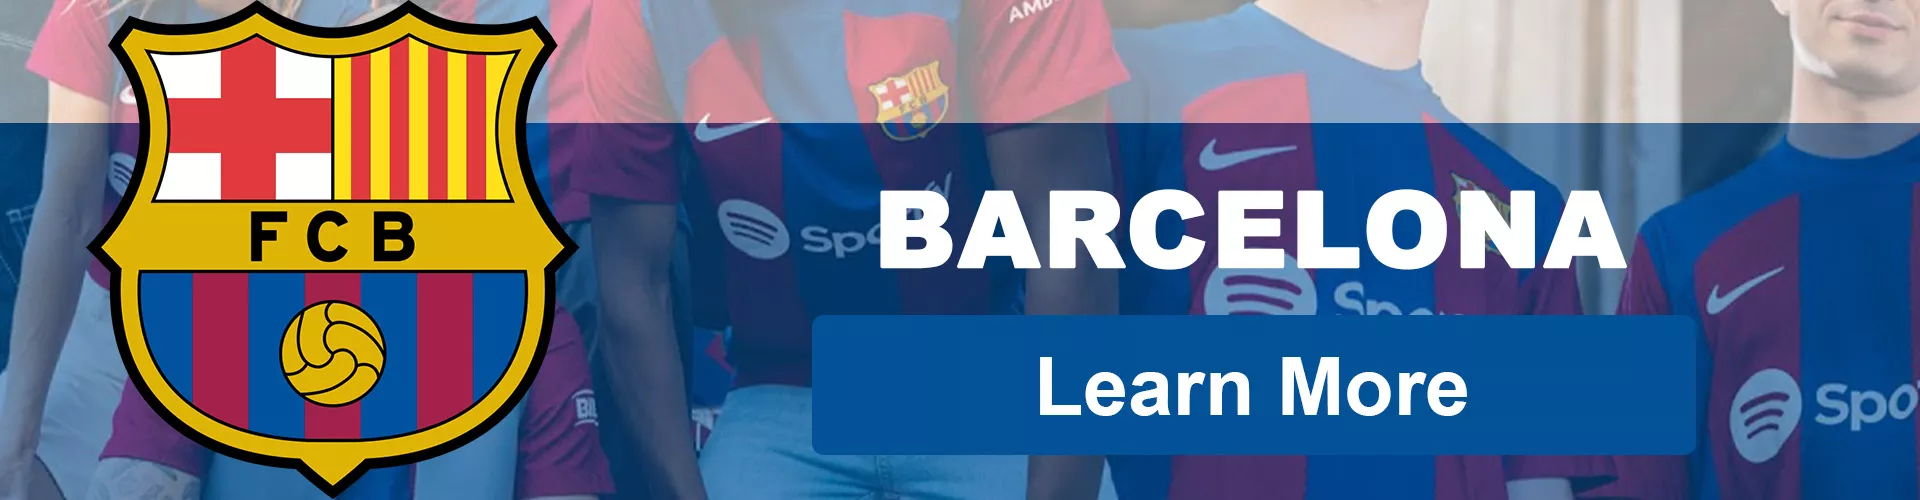 FC Barcelona - bestsoccerstore